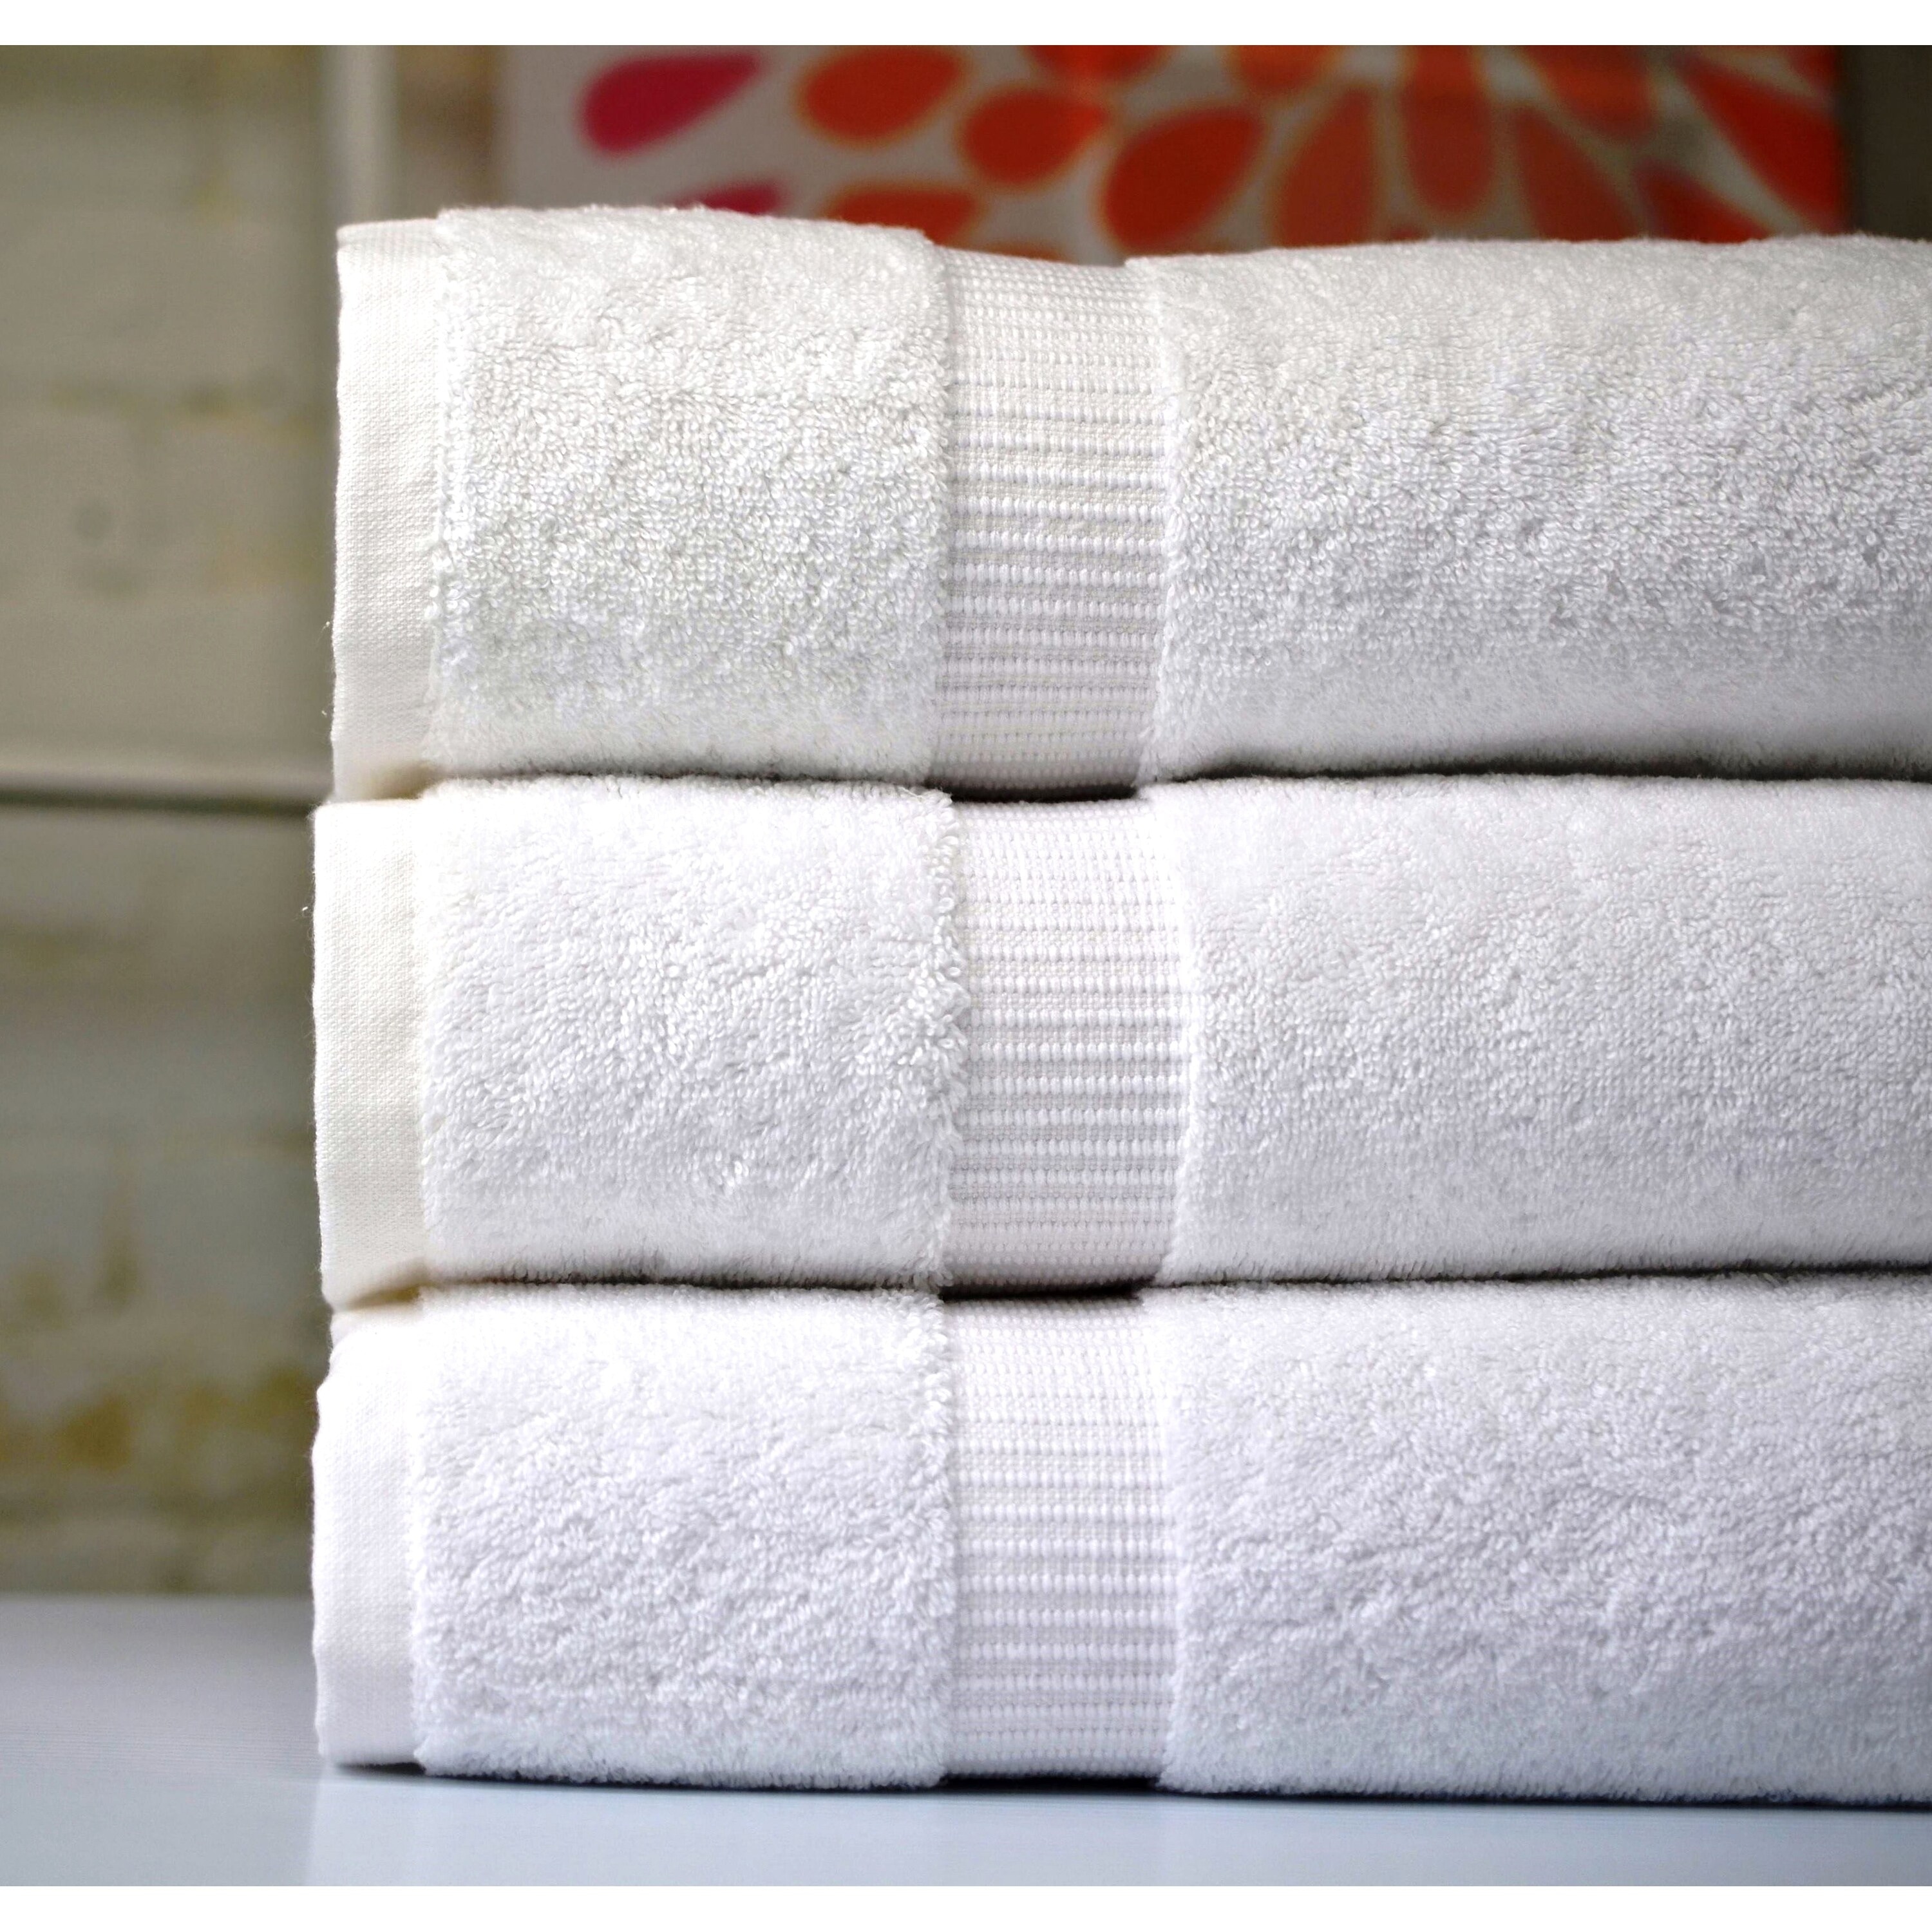 Royal Turkish Cotton White Oversized Bath Sheet - Plush Bath sheets Towels Set of 3 - 35x70